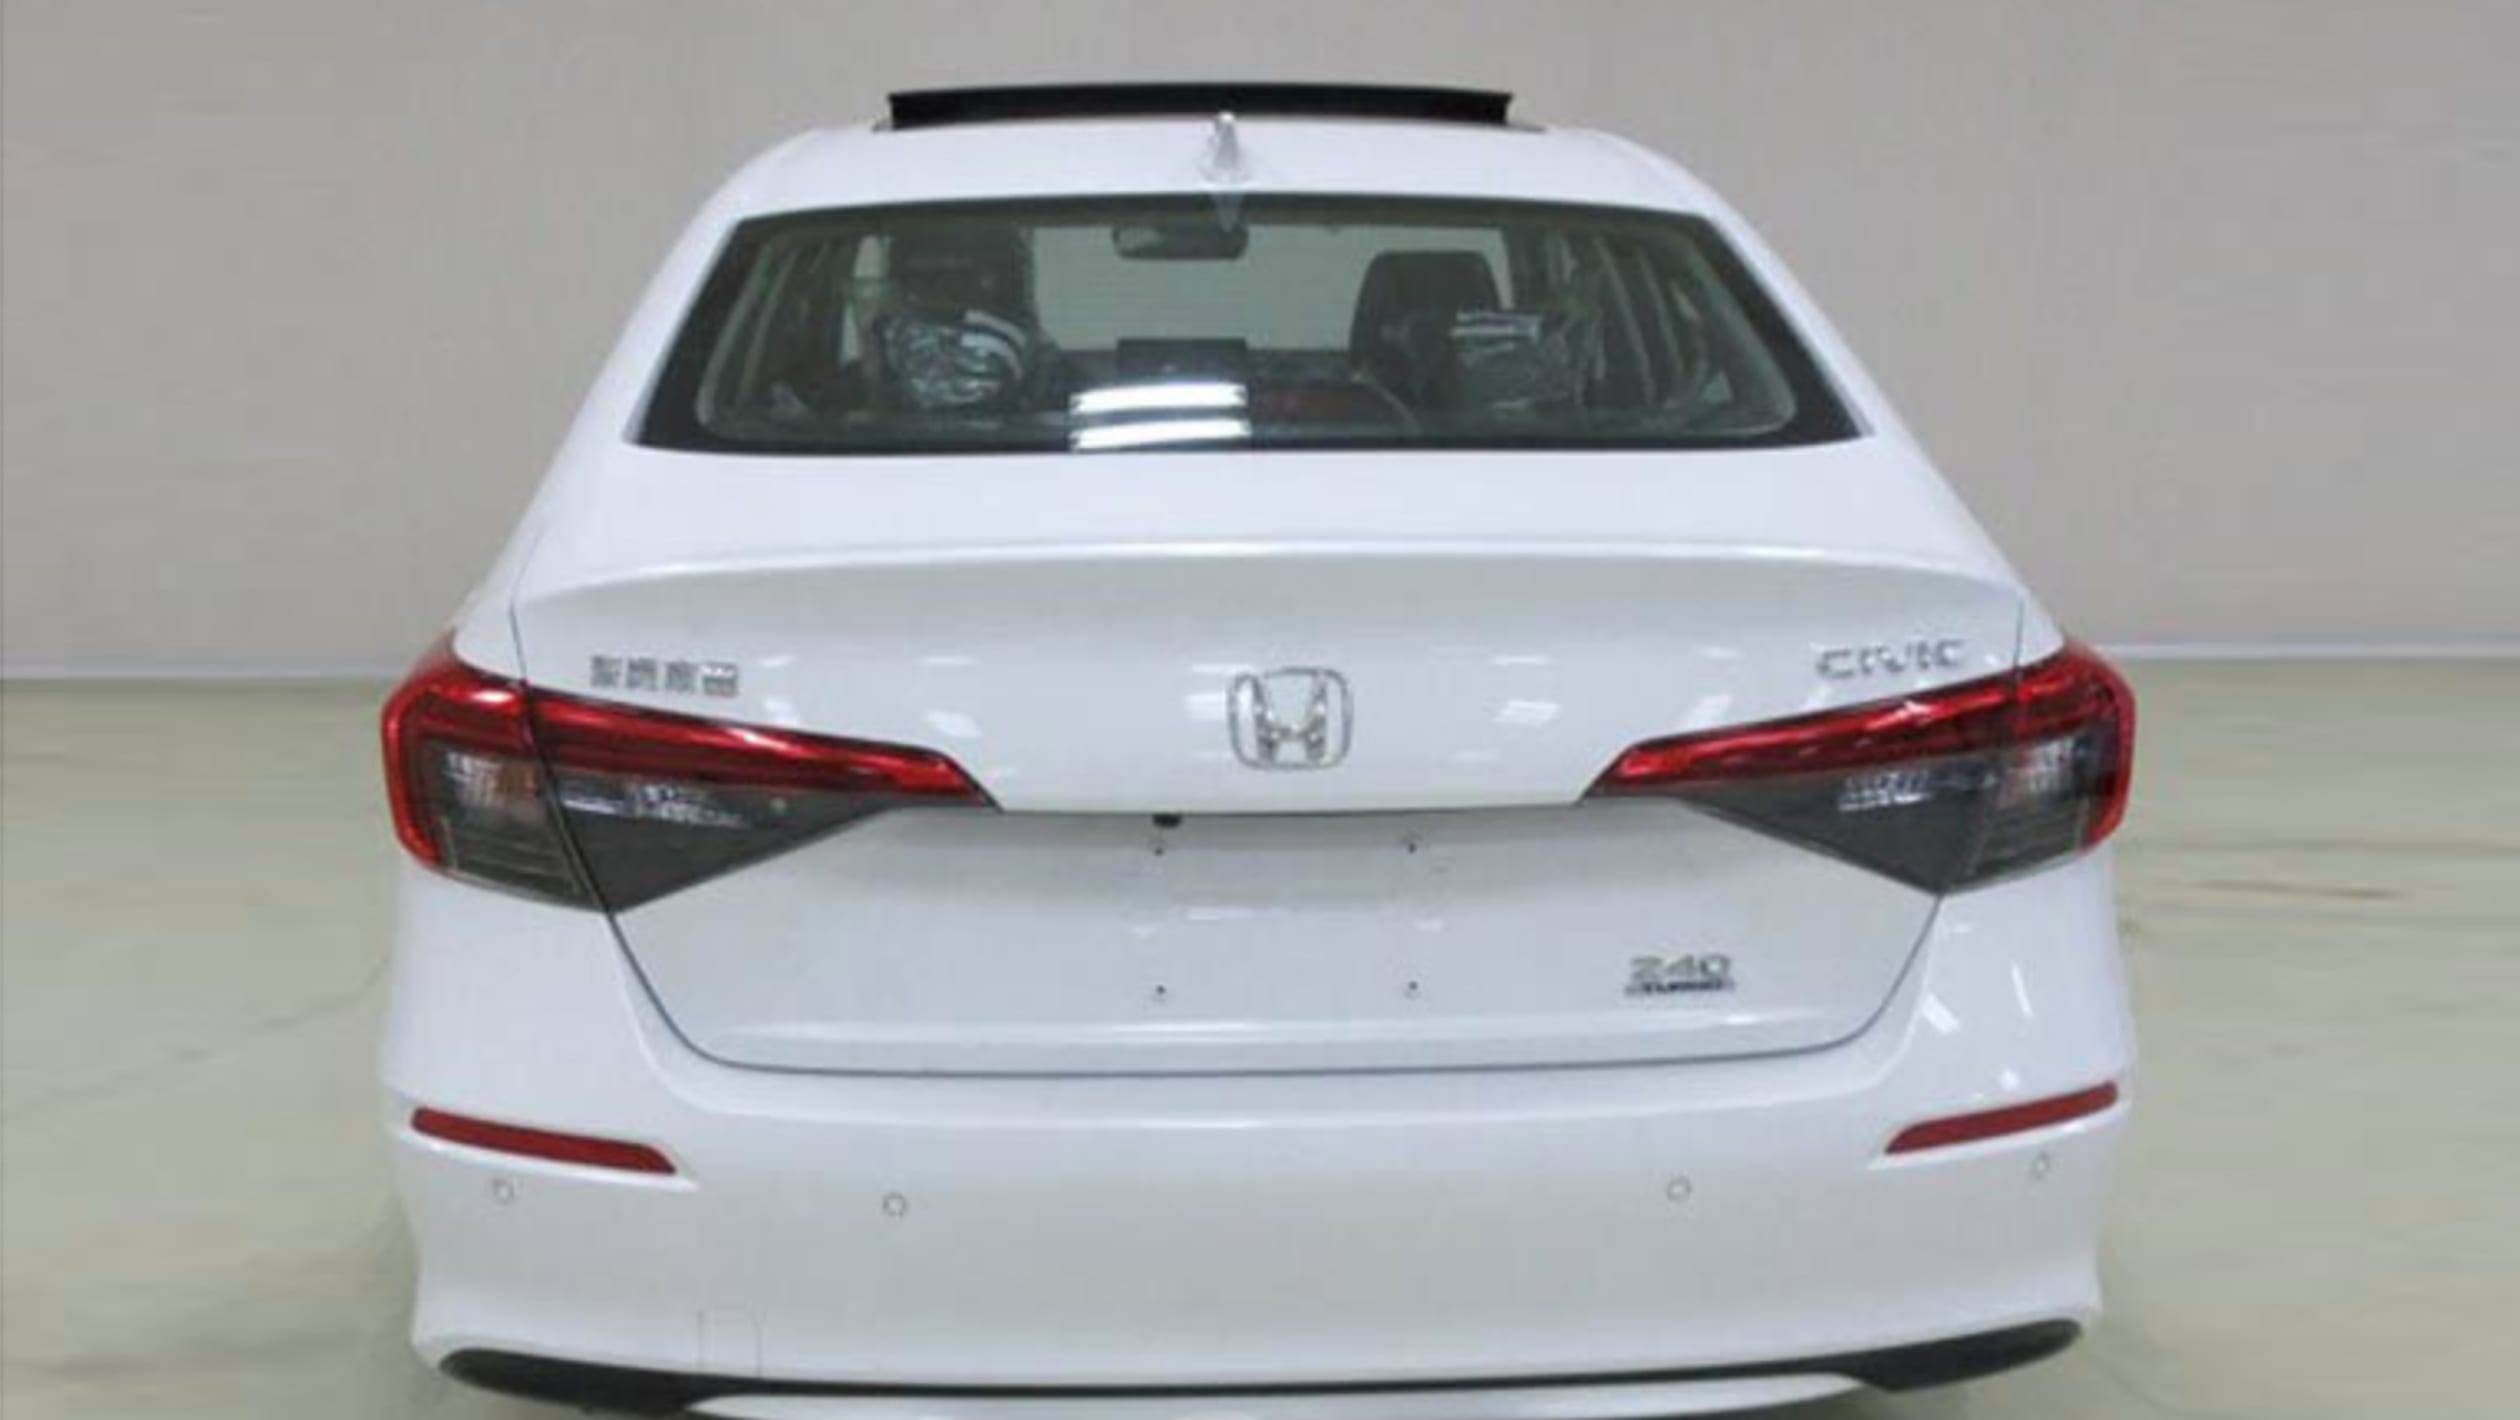 Honda Civic patent leak 2